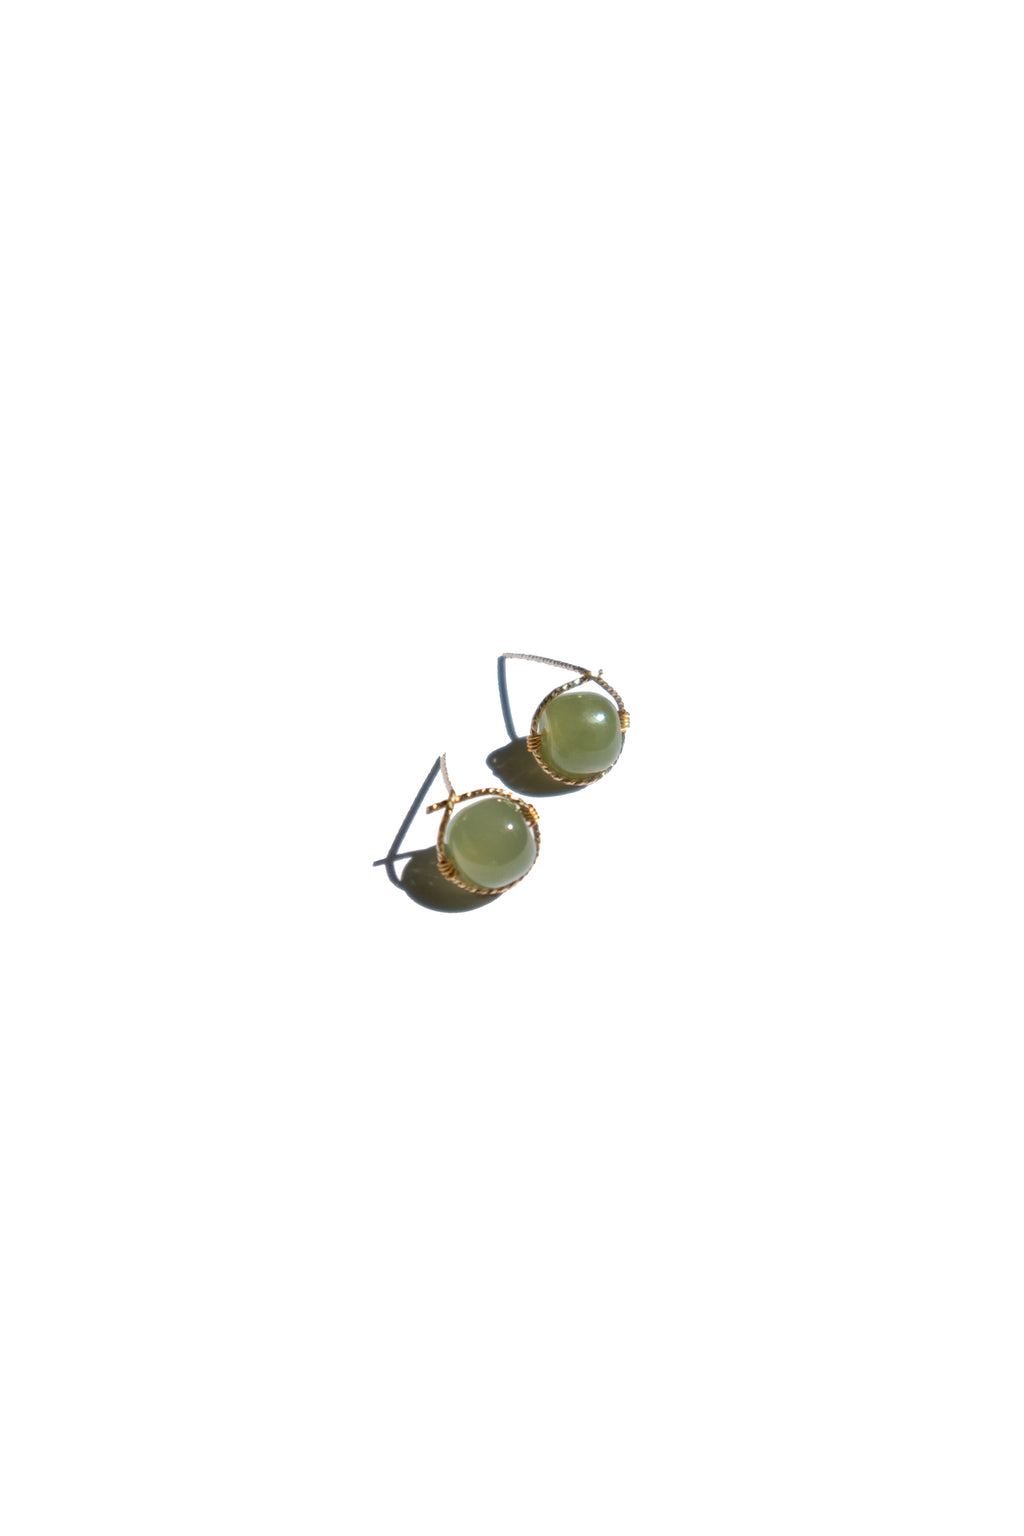 seree-sydney-green-nephrite-jade-stud-earrings